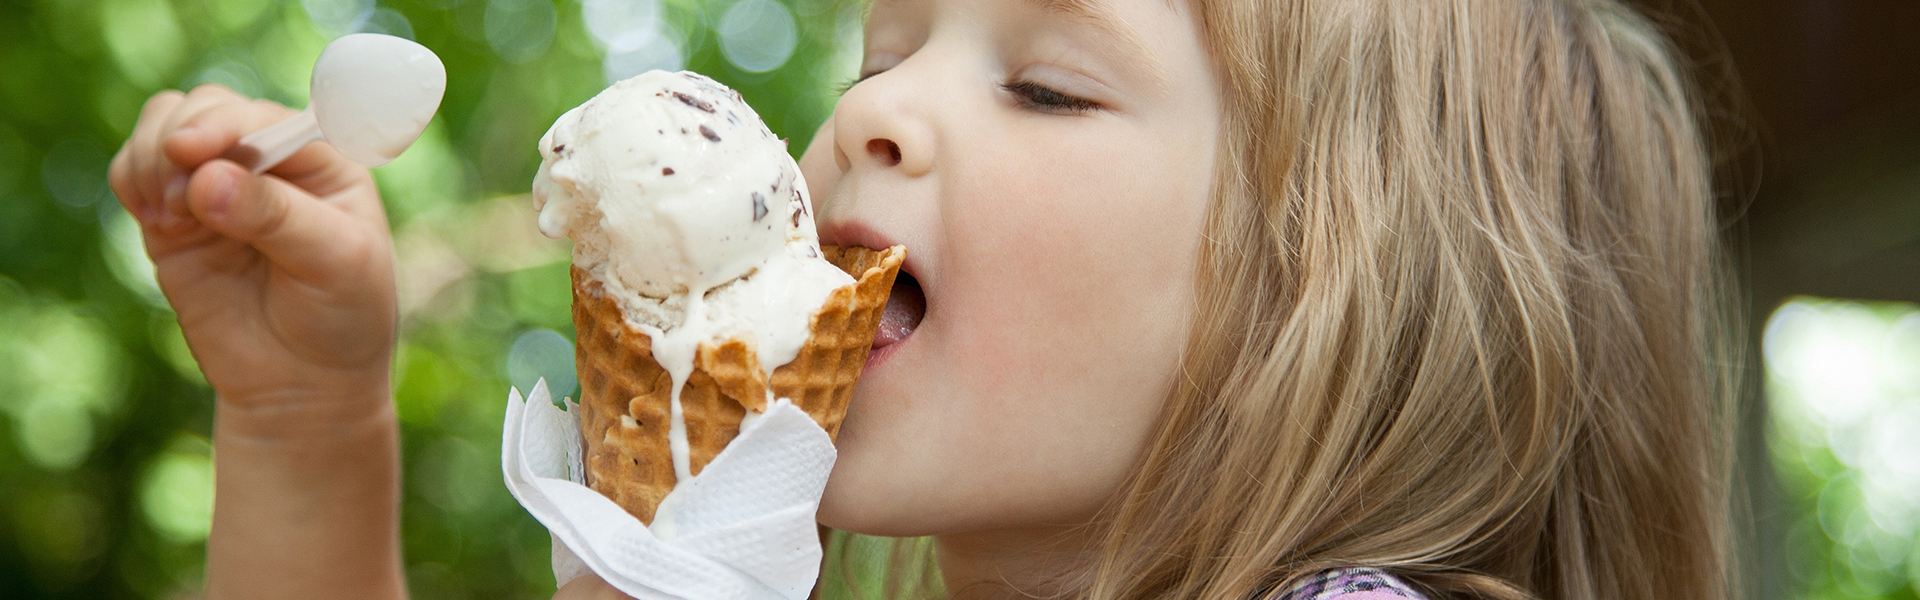 Child-enjoys-ice-cream